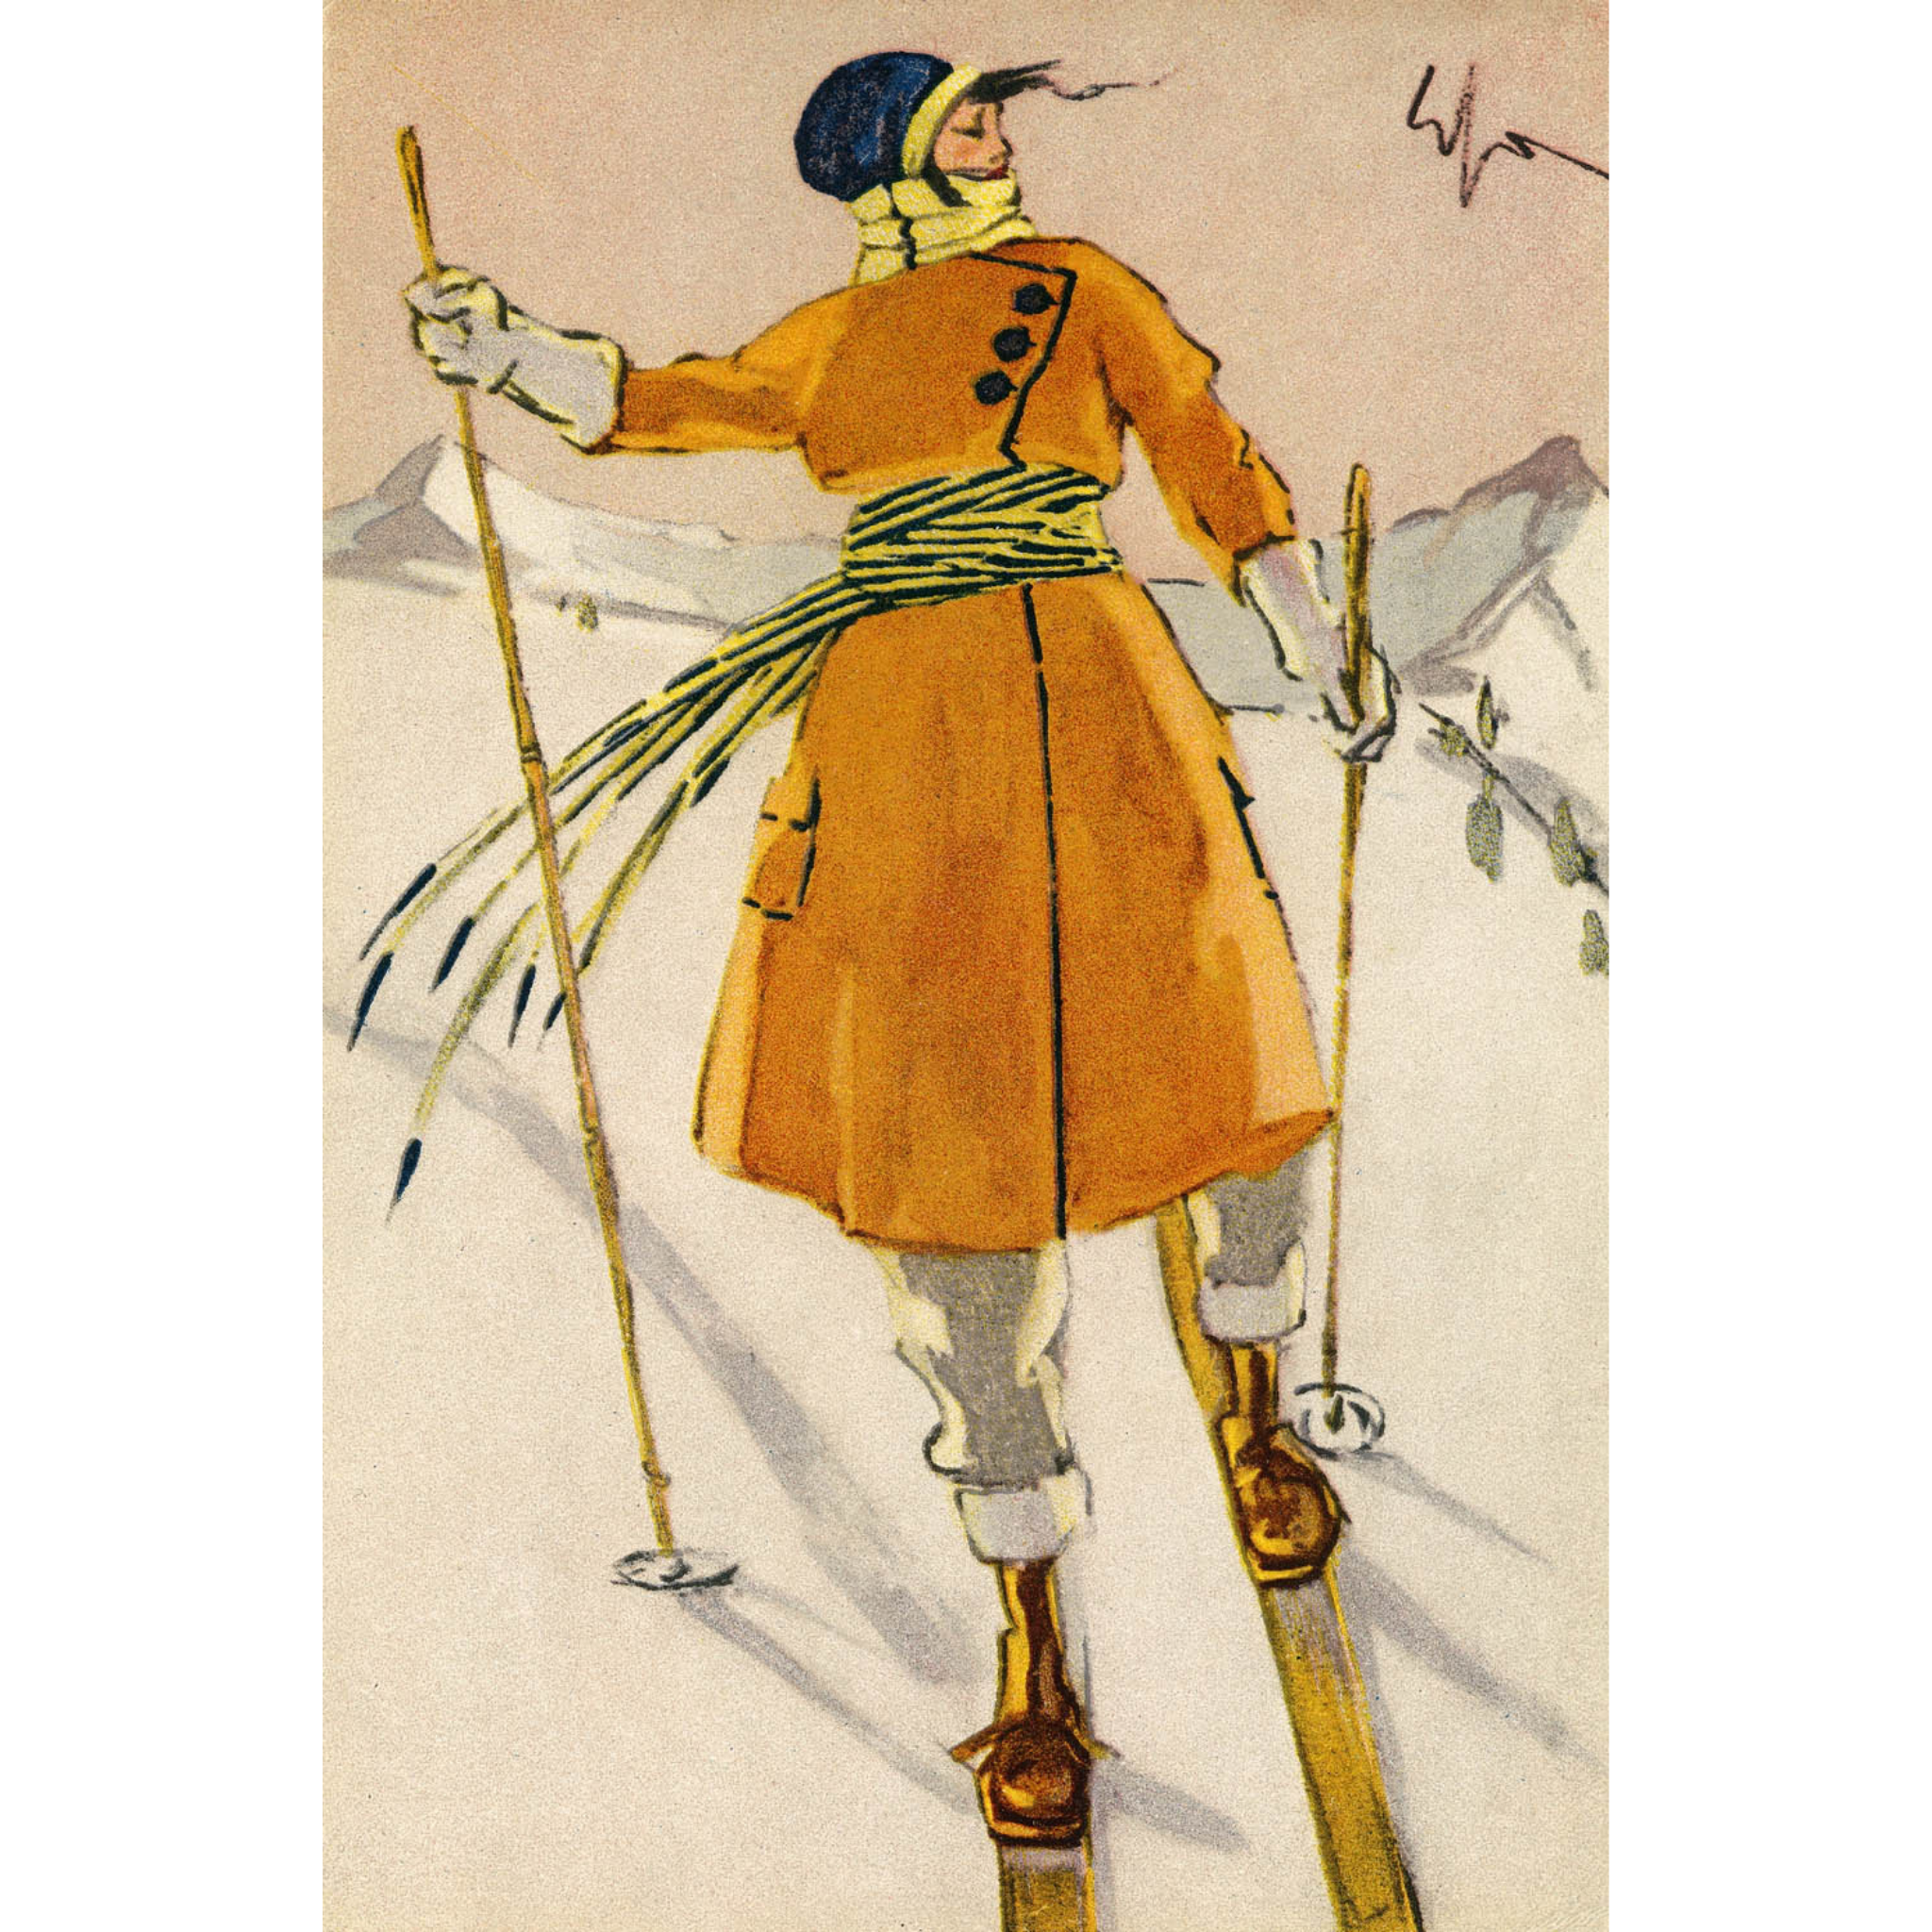 Art Deco Woman on Skis with Orange Coat - ca. 1930 Serigraph